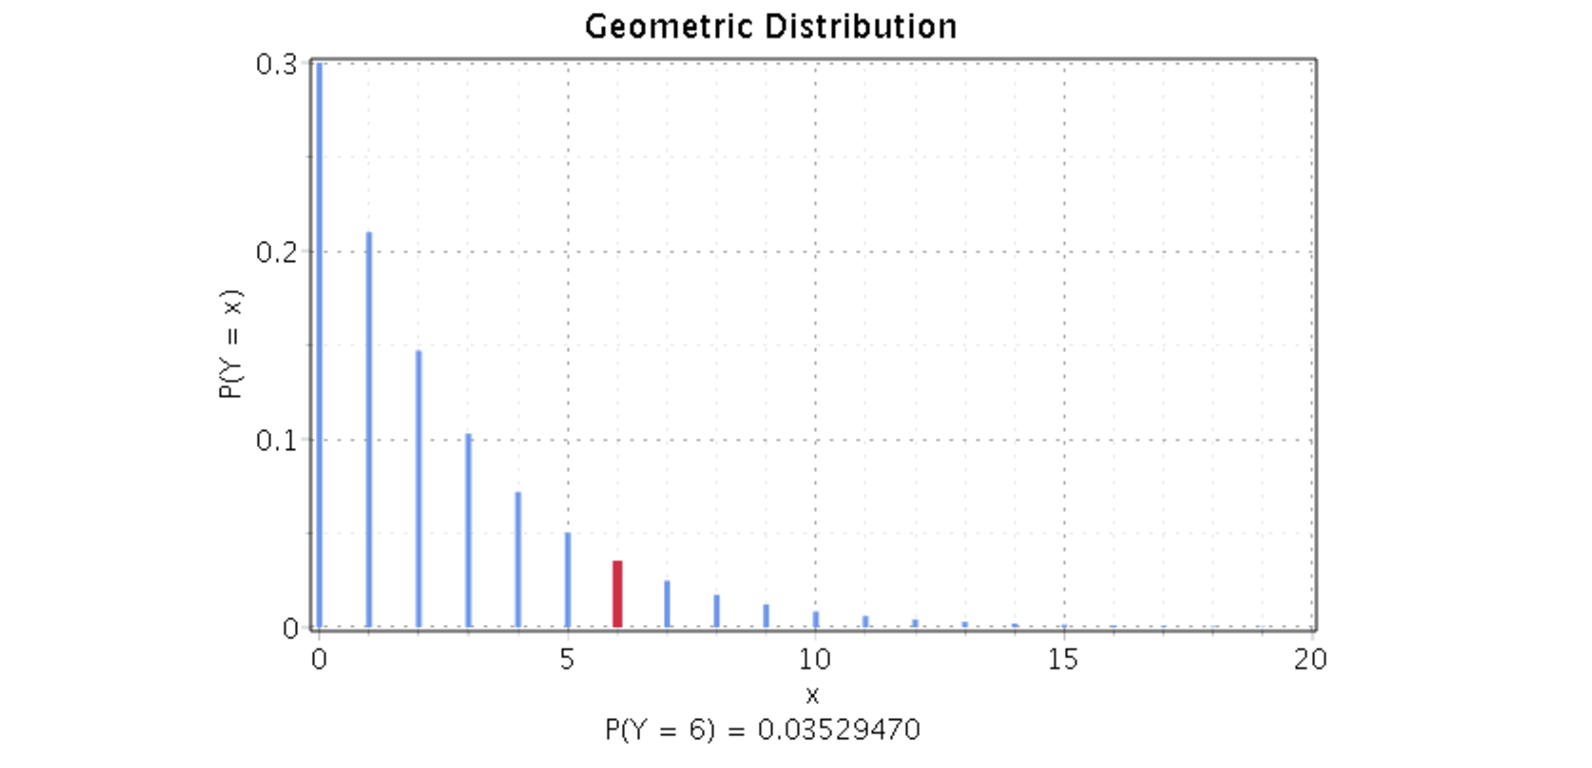 Geometric Distribution